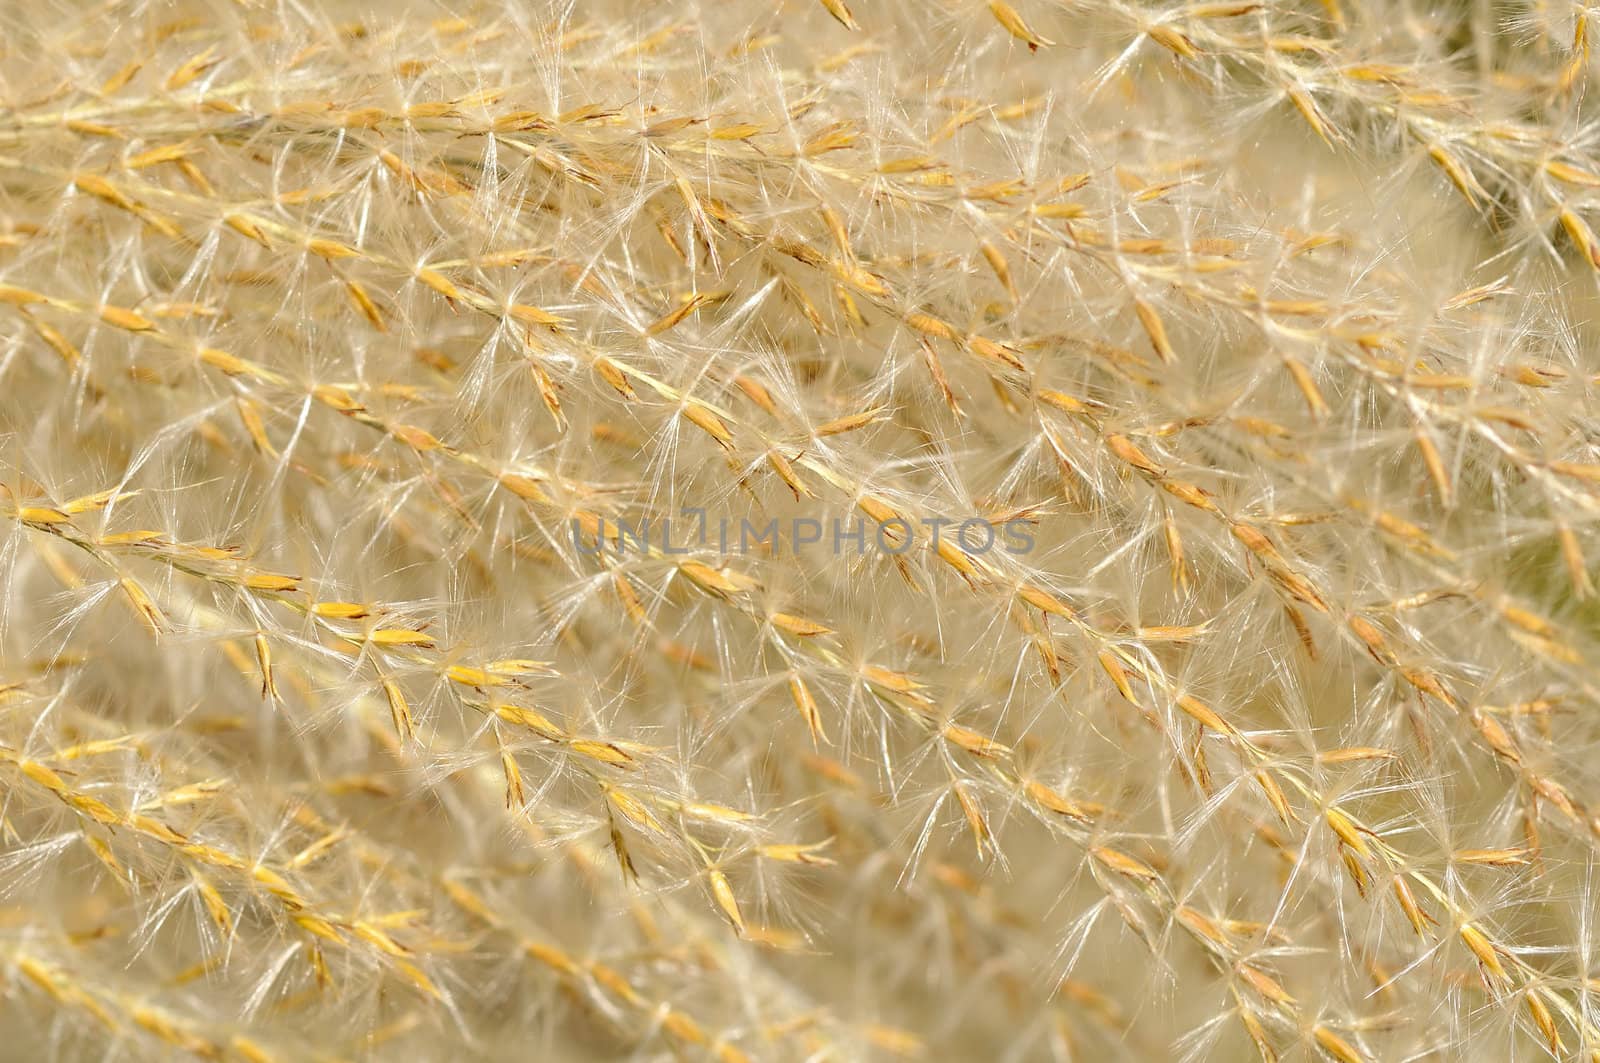 Dried pampa grass details by Hbak